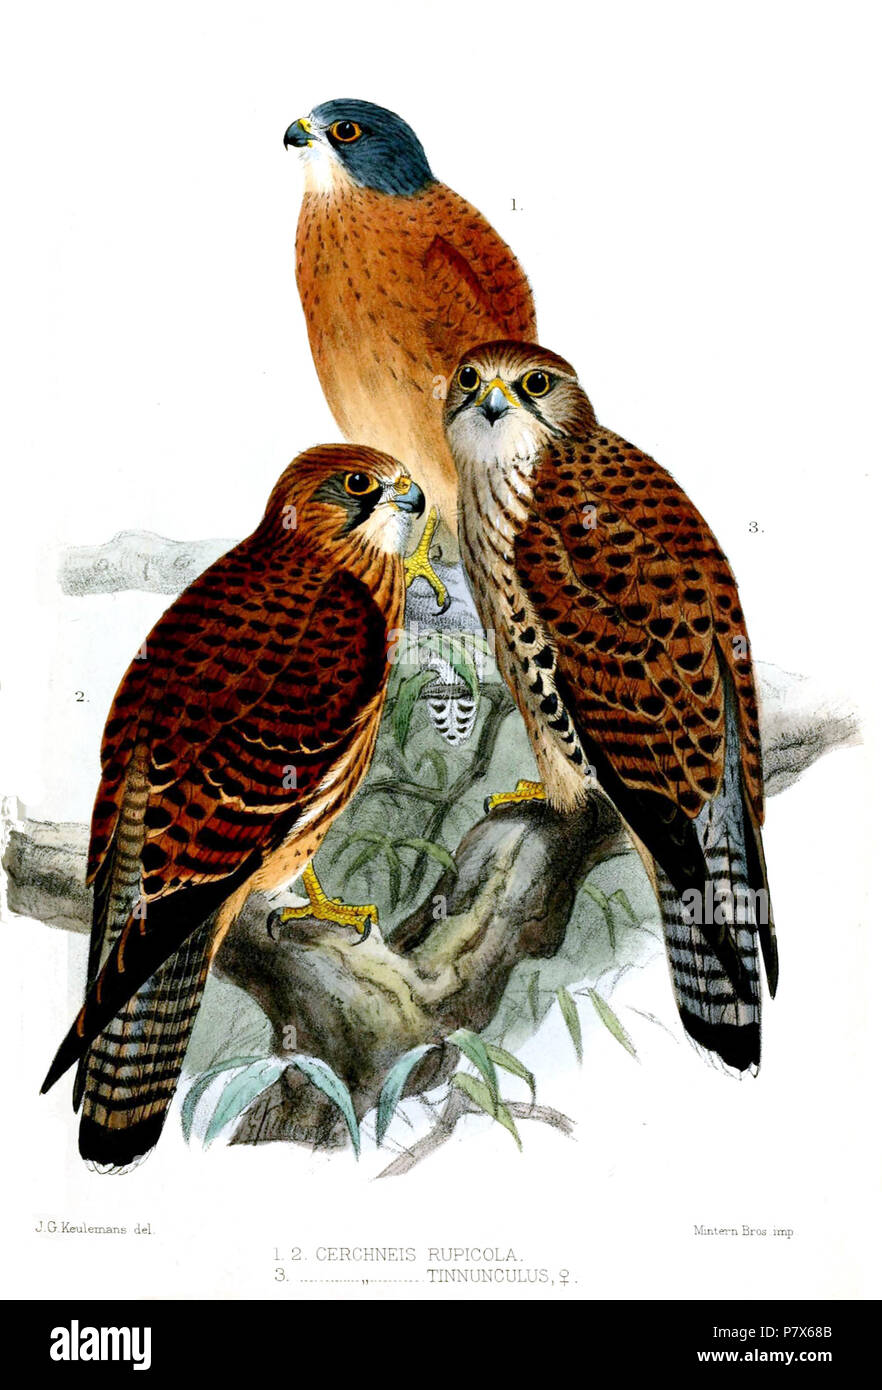 Falco rupicola (1, 2) & F. tinnunculus 3 . 1874 155 FalcoKeulemans Stock Photo